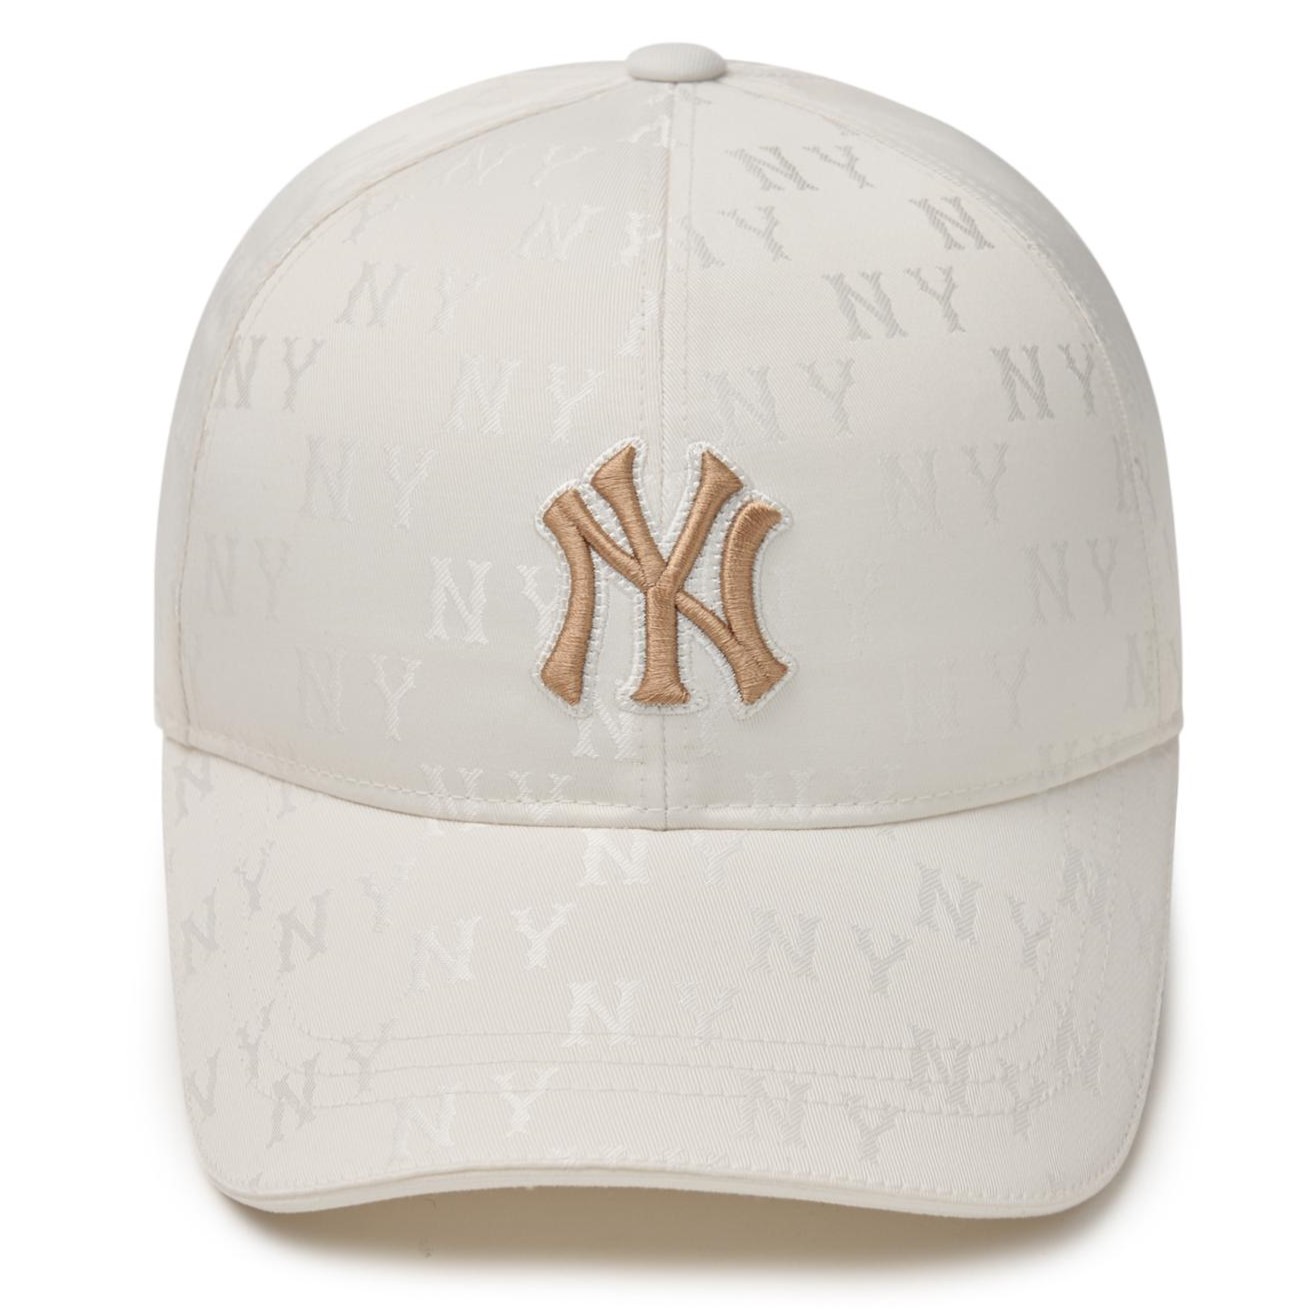 NÓN KẾT UNISEX MLB CLASSIC MONOGRAM STRUCTURED BALL CAP NEW YORK YANKEES BEIGE 3ACPM014N-50CRS 1